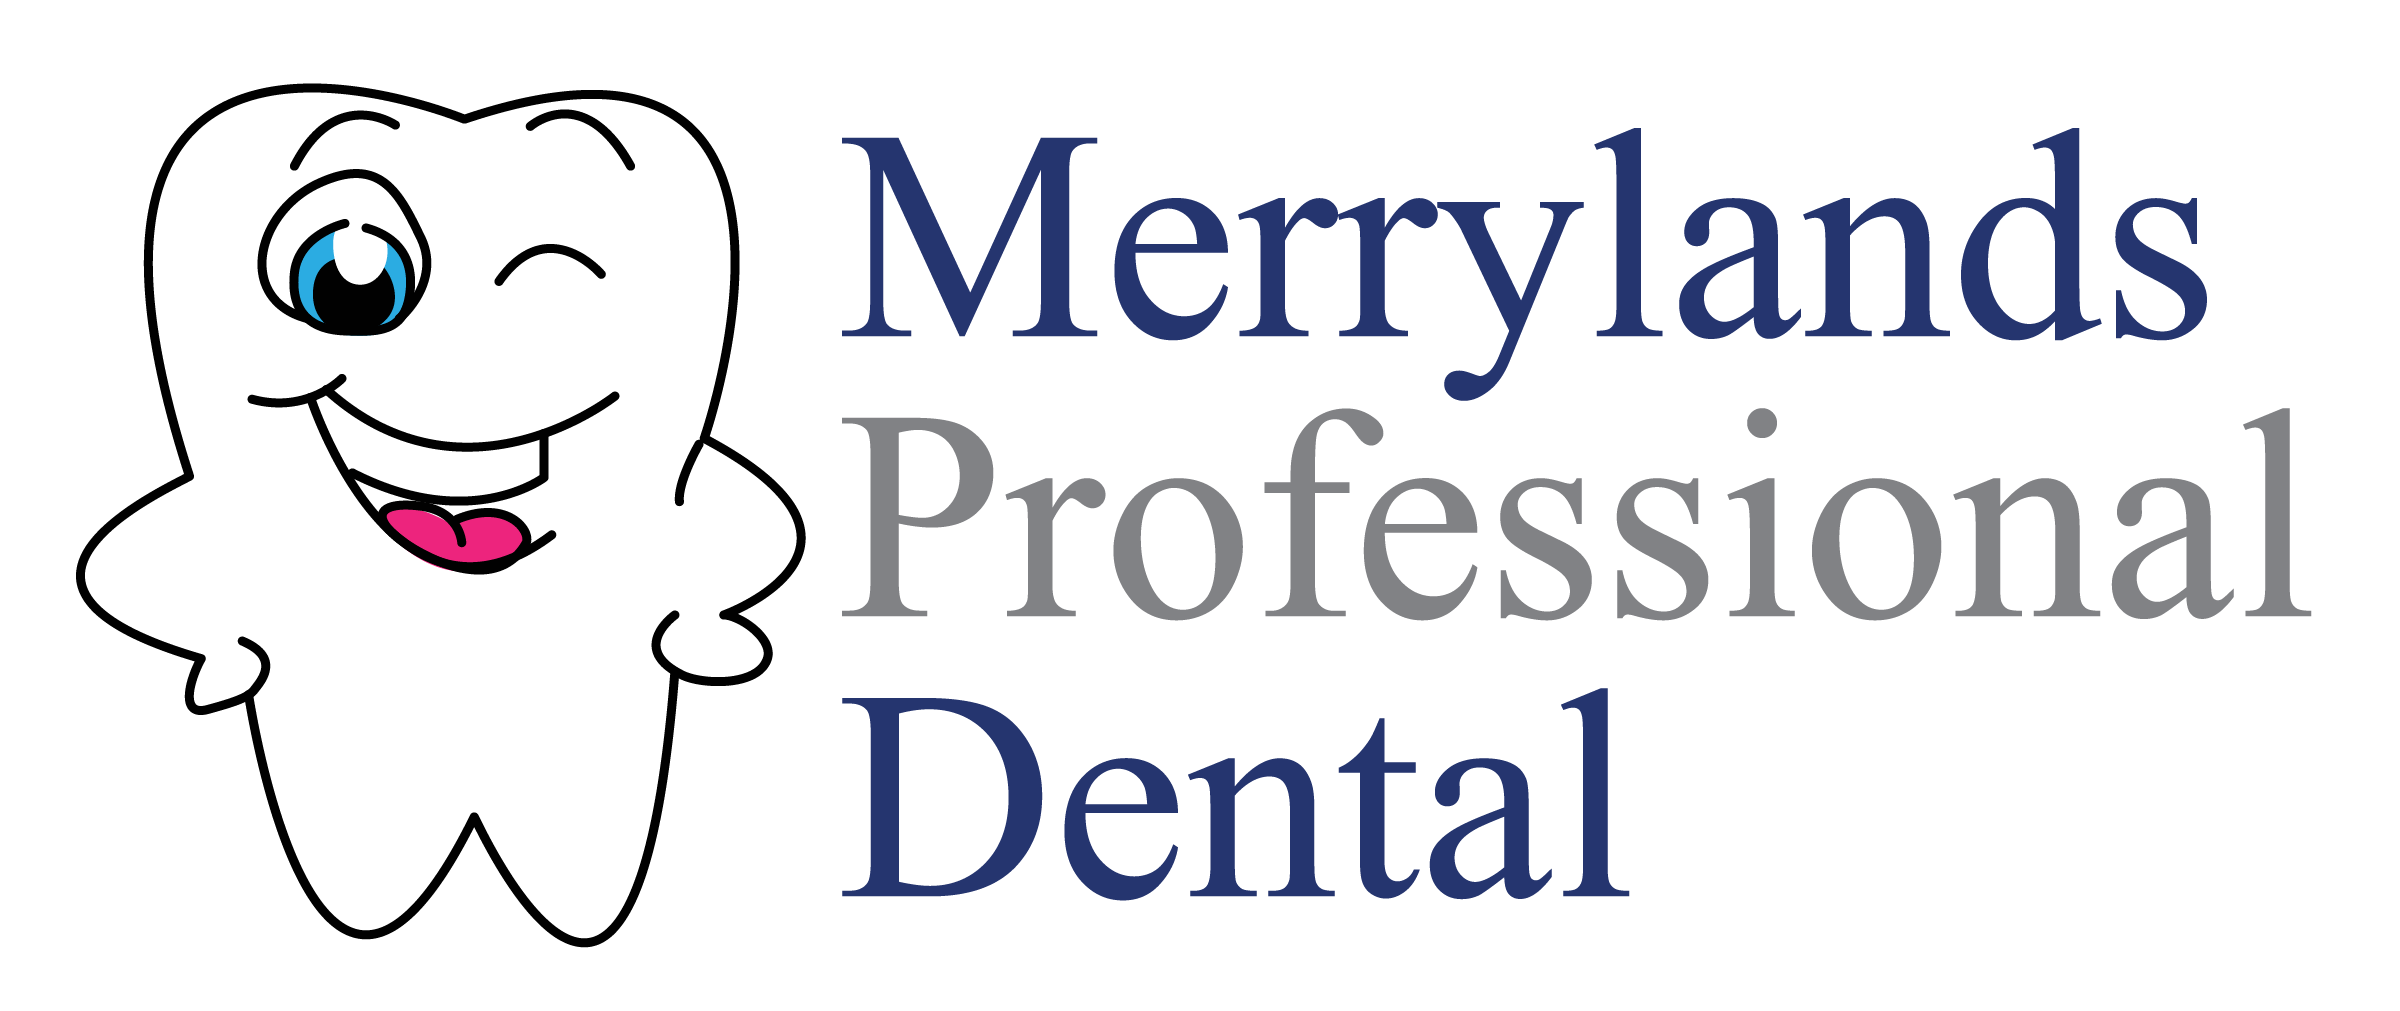 Merrylands Professional Dental